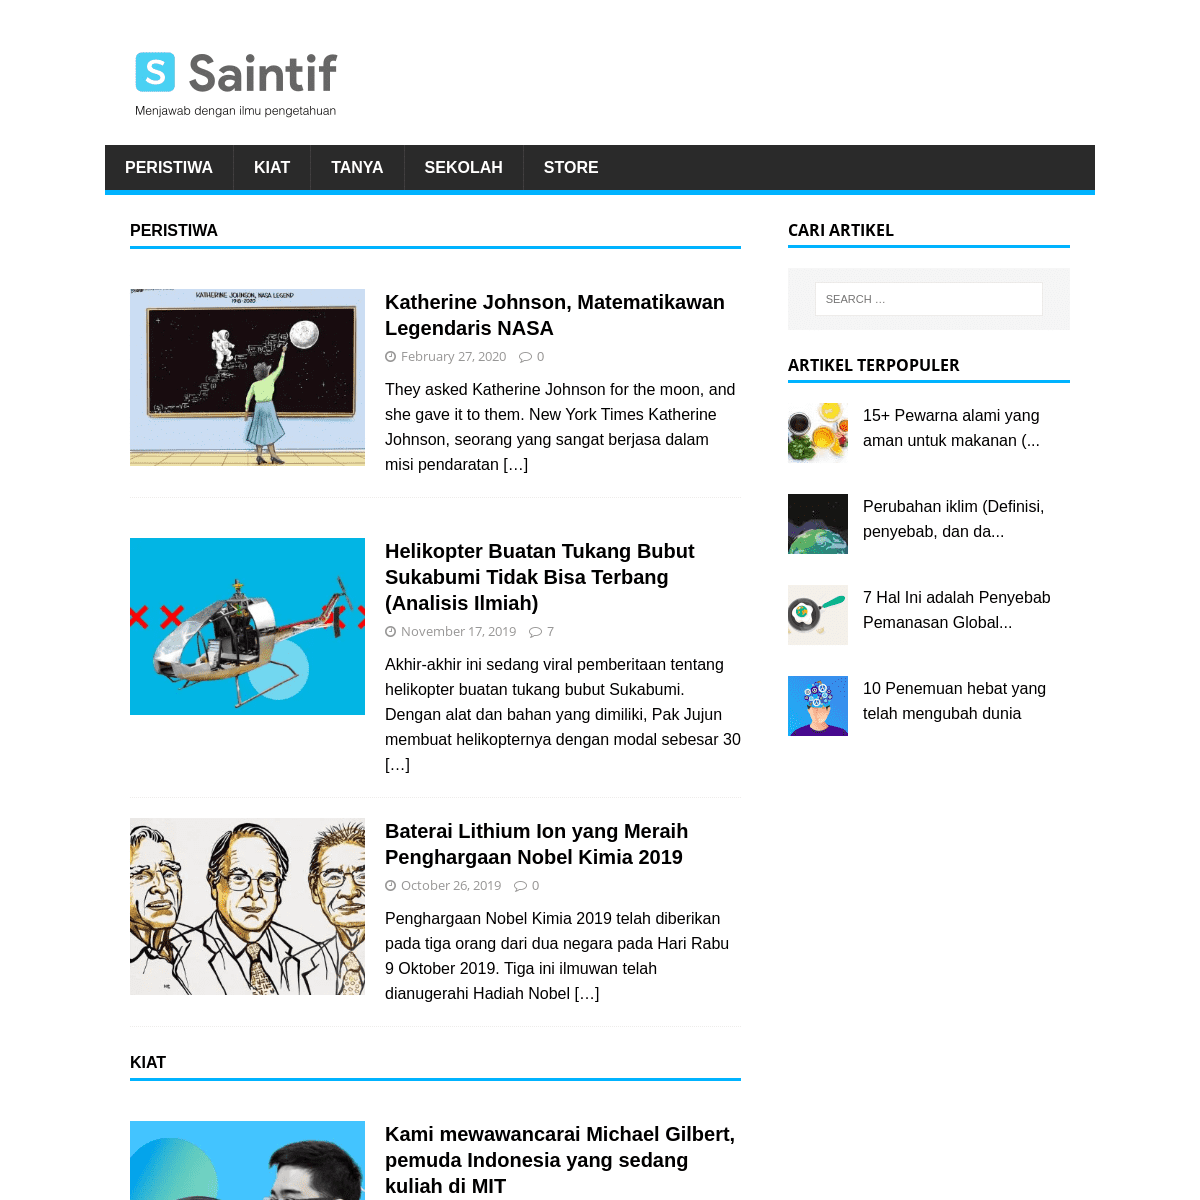 A complete backup of saintif.com